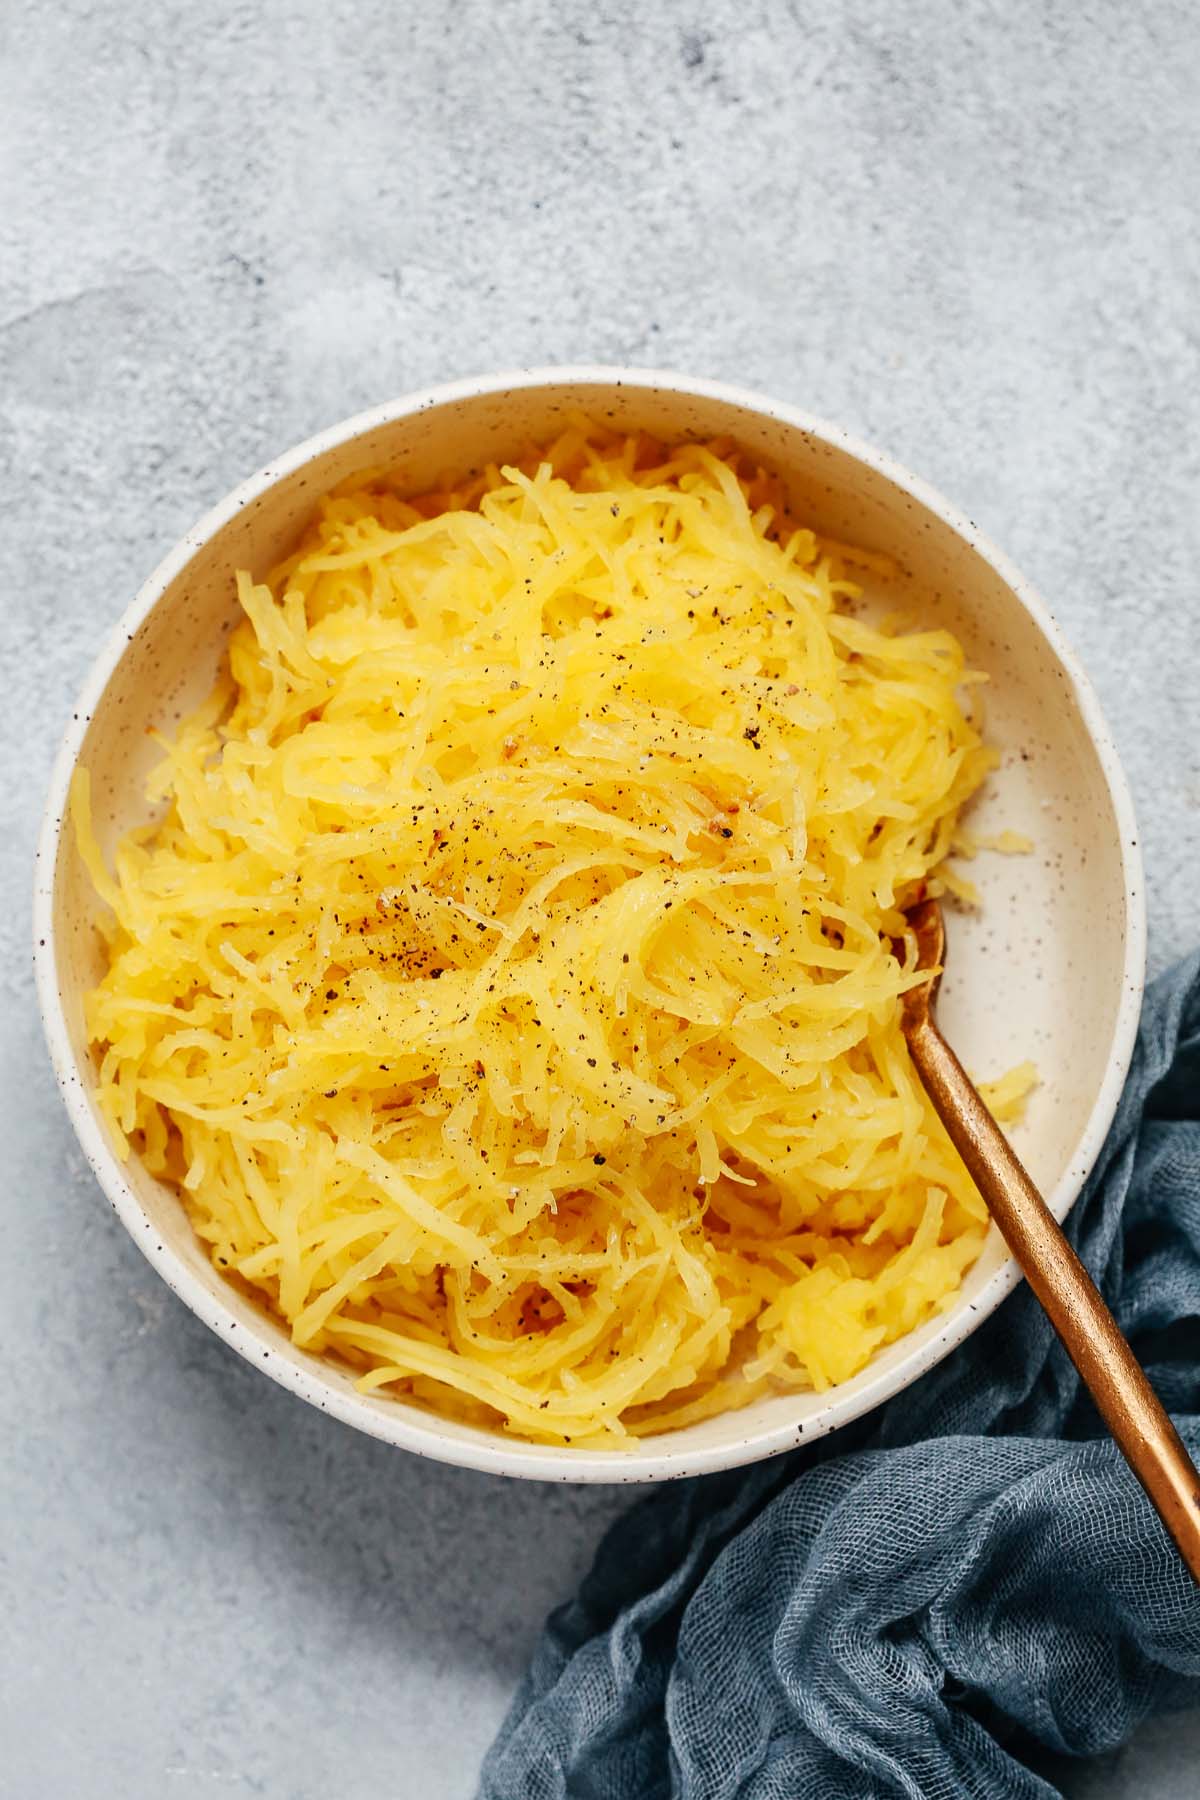 How to Roast Spaghetti Squash